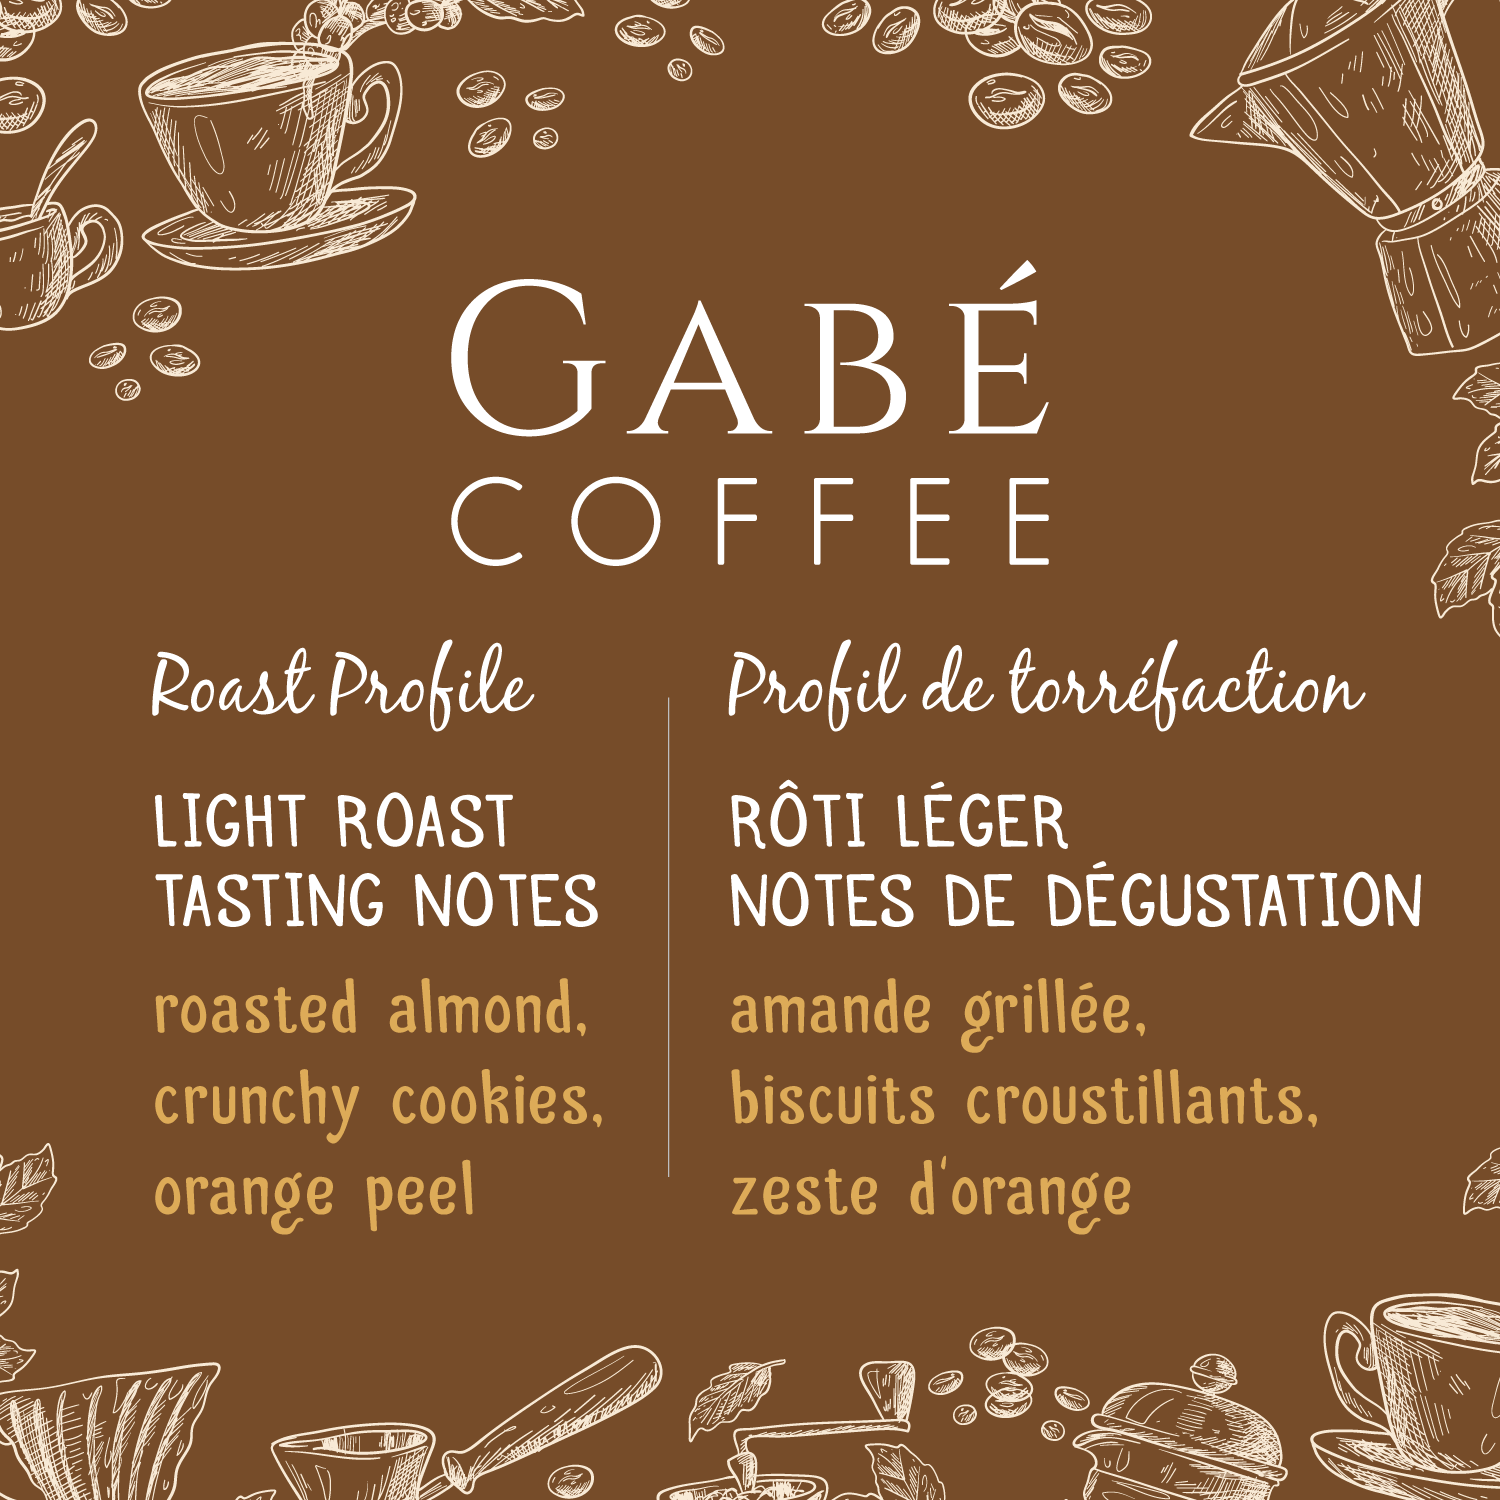 Gabé Coffee - Light Roast Whole Bean Coffee - Gabe Coffee's freshly roasted light roast beans spread on a wooden surface.